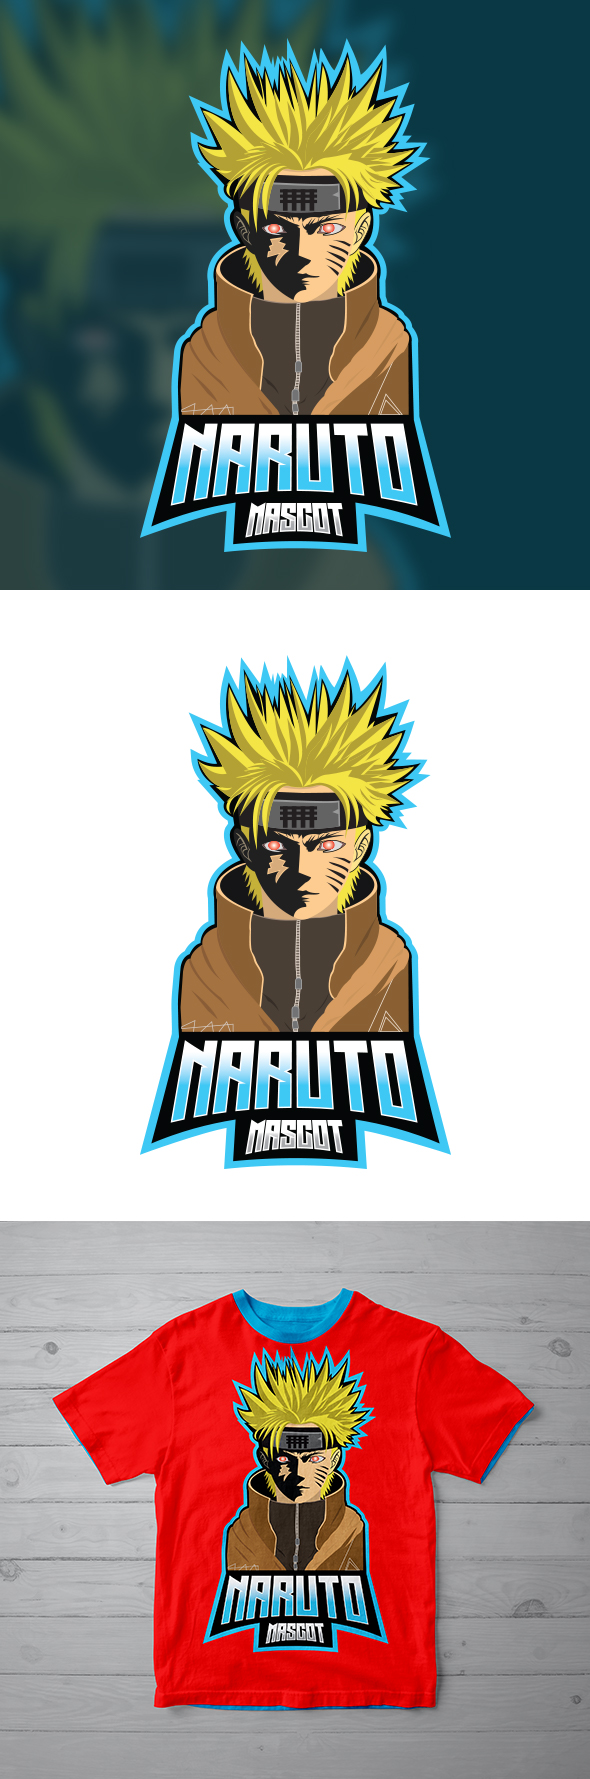 Naruto server logo